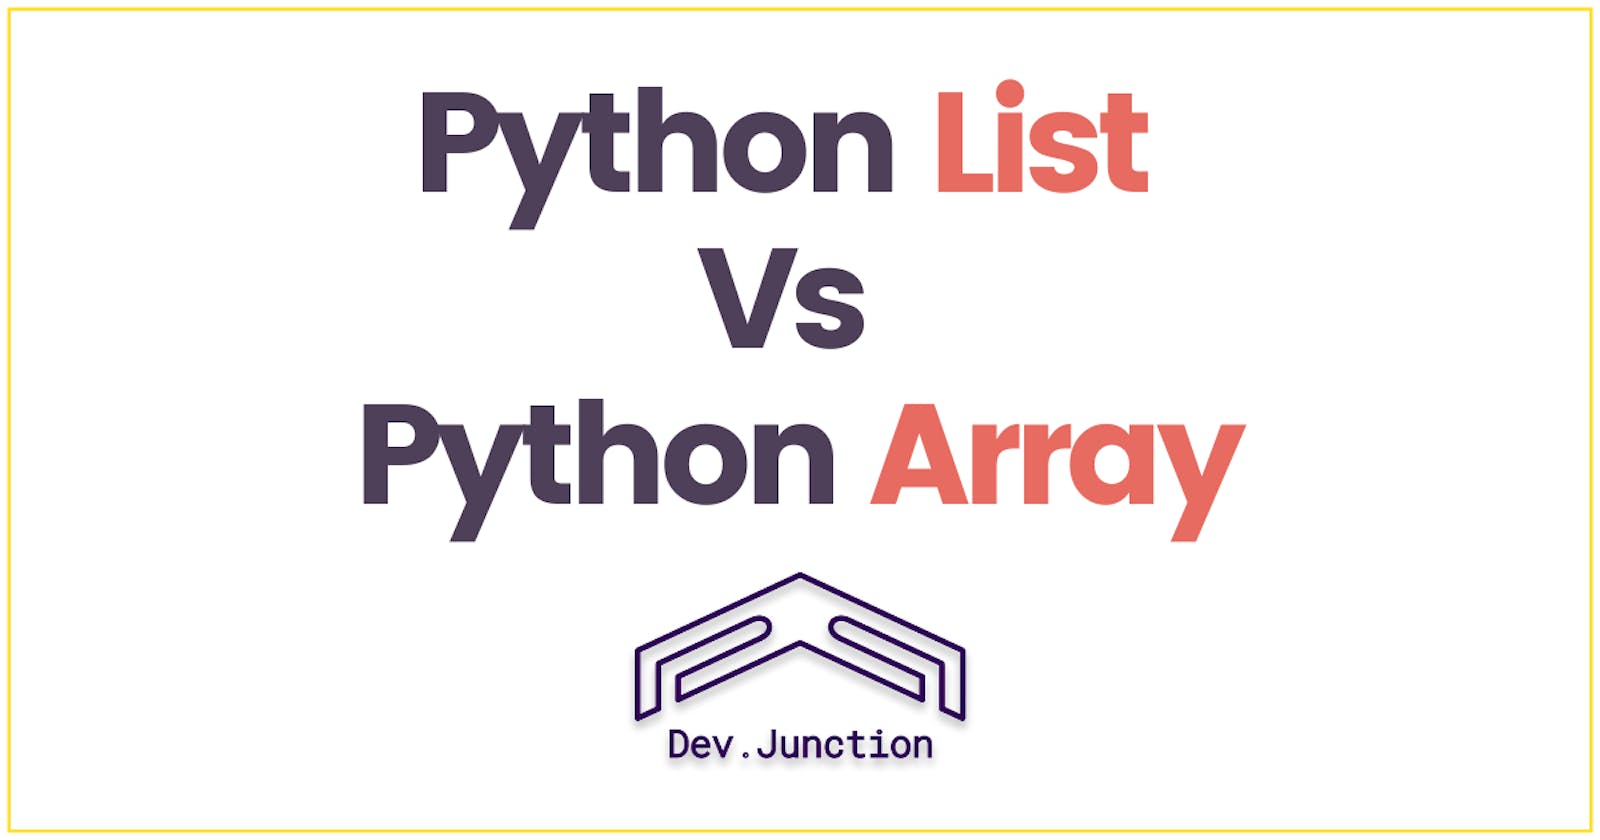 Python List Vs Python Array in a nutshell